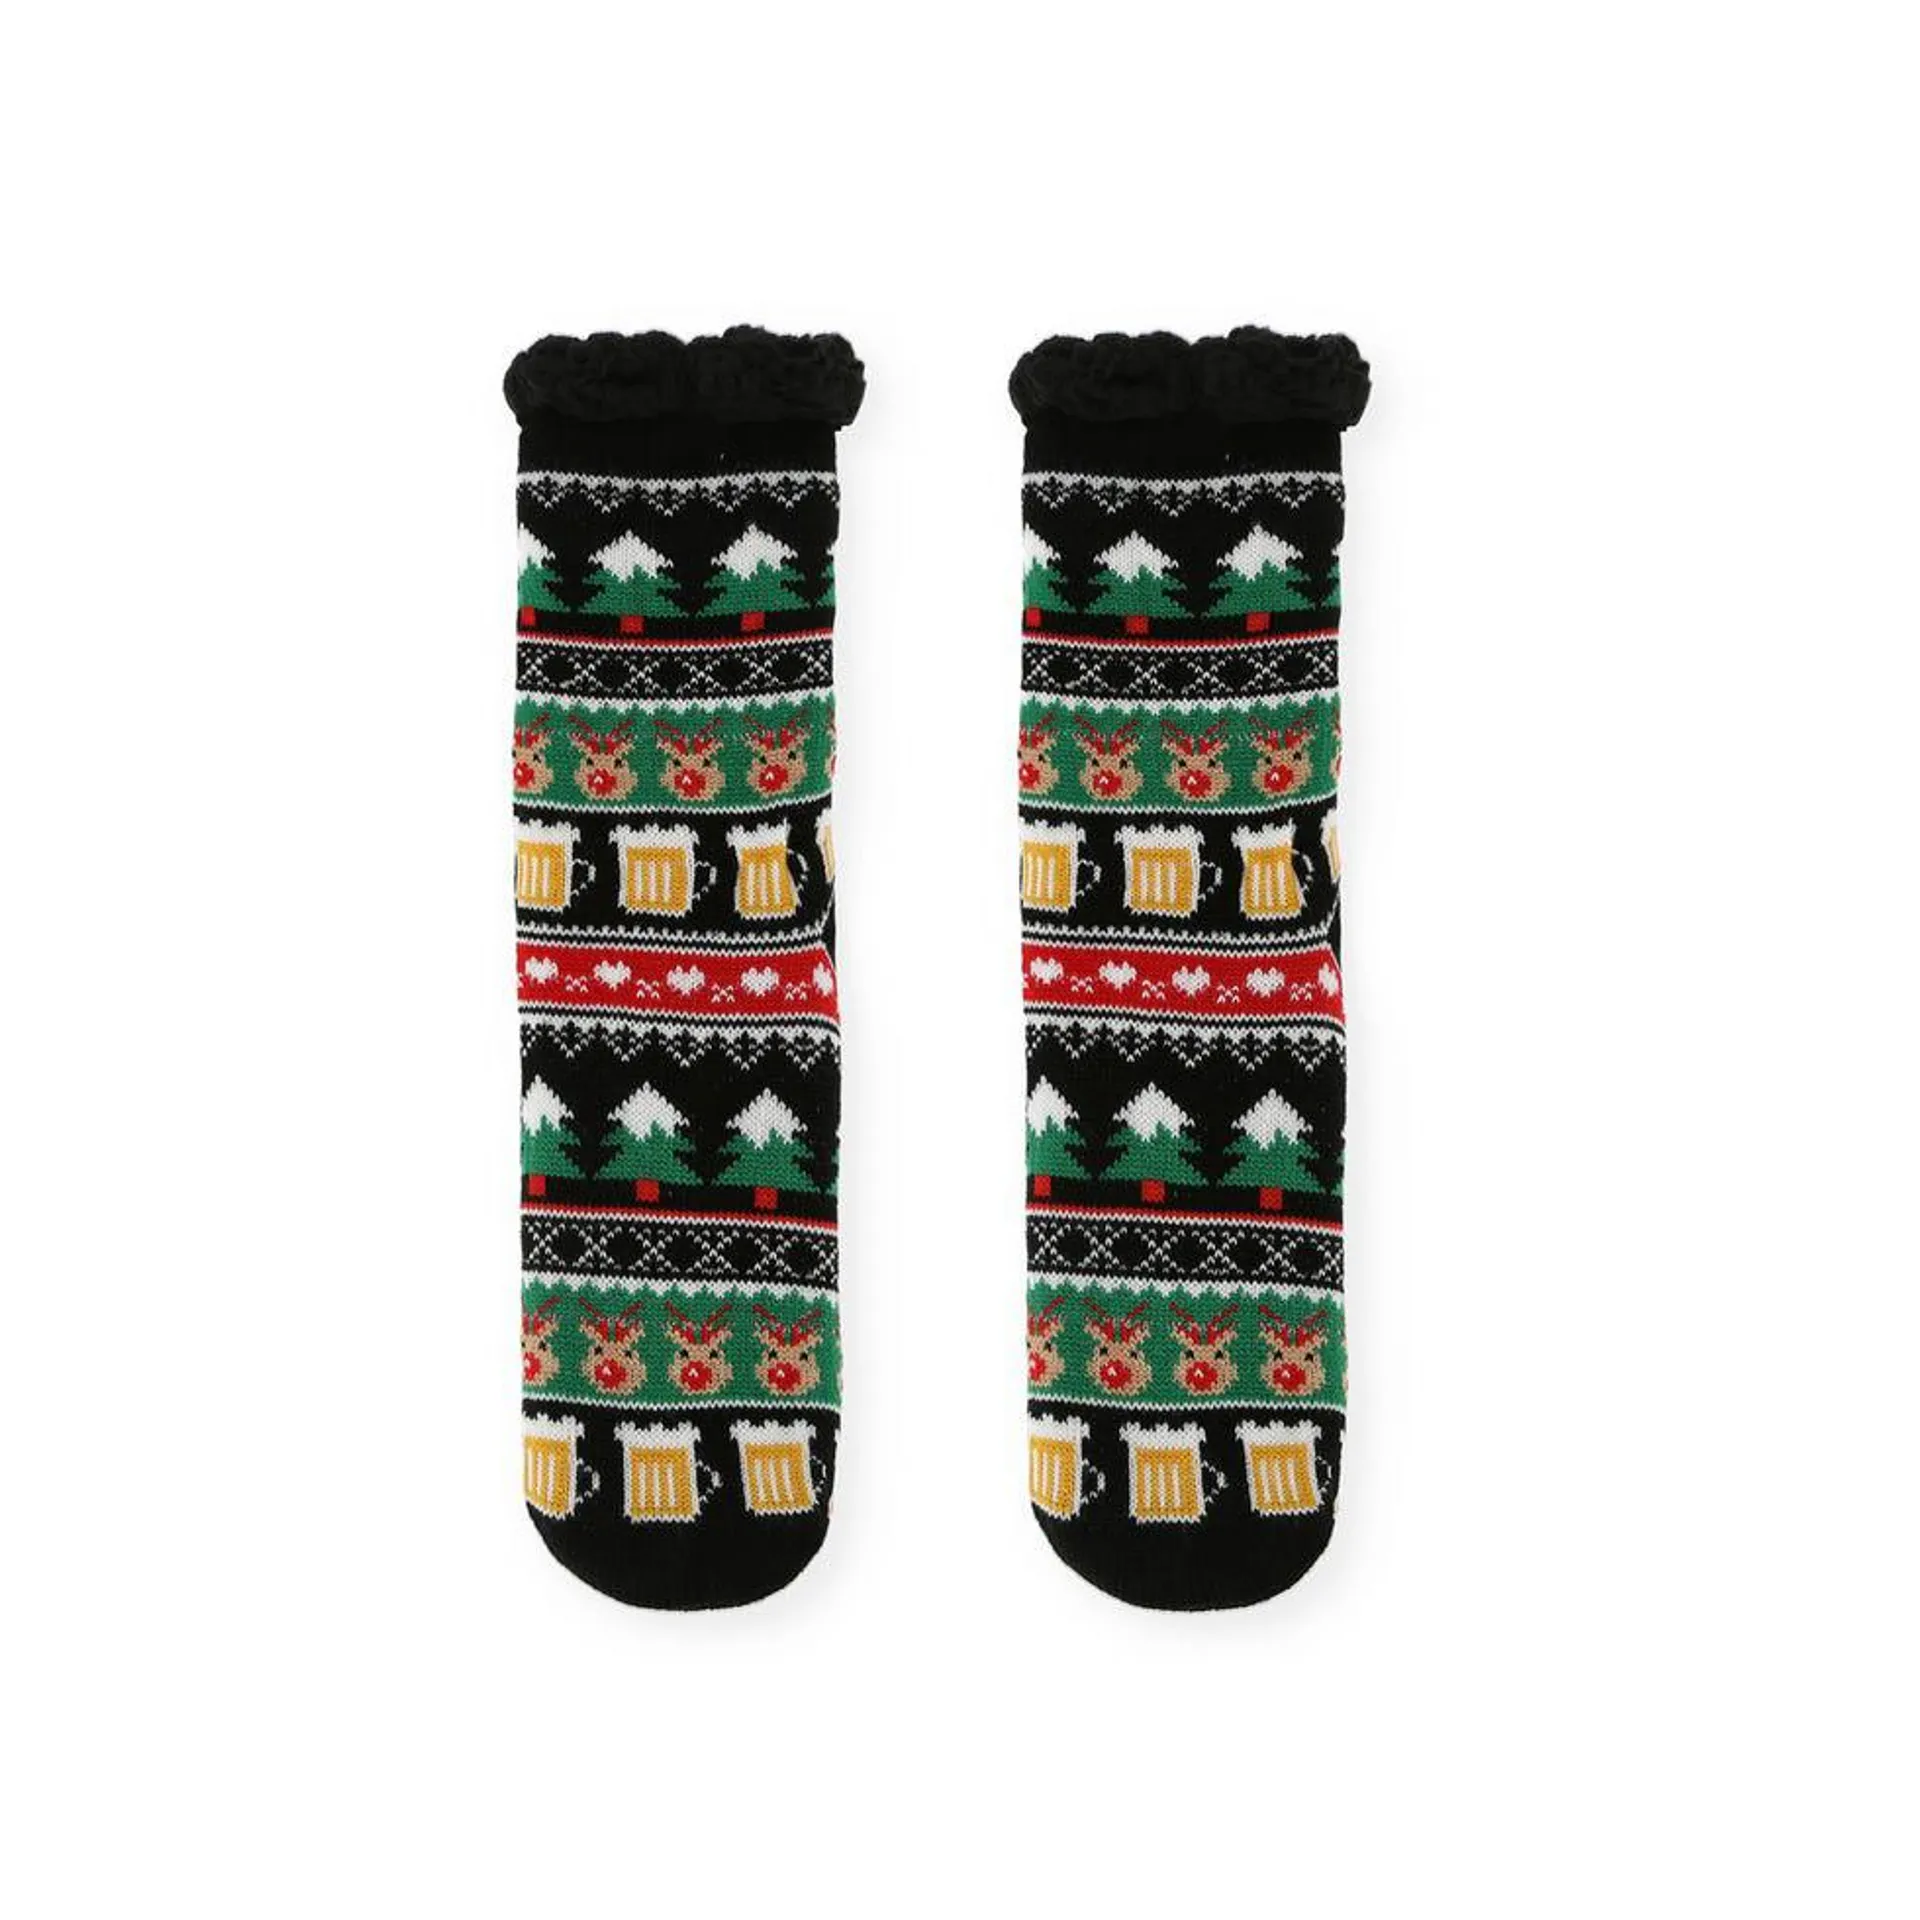 Calcetines gruesos navideños – Arcade talla - L/XL